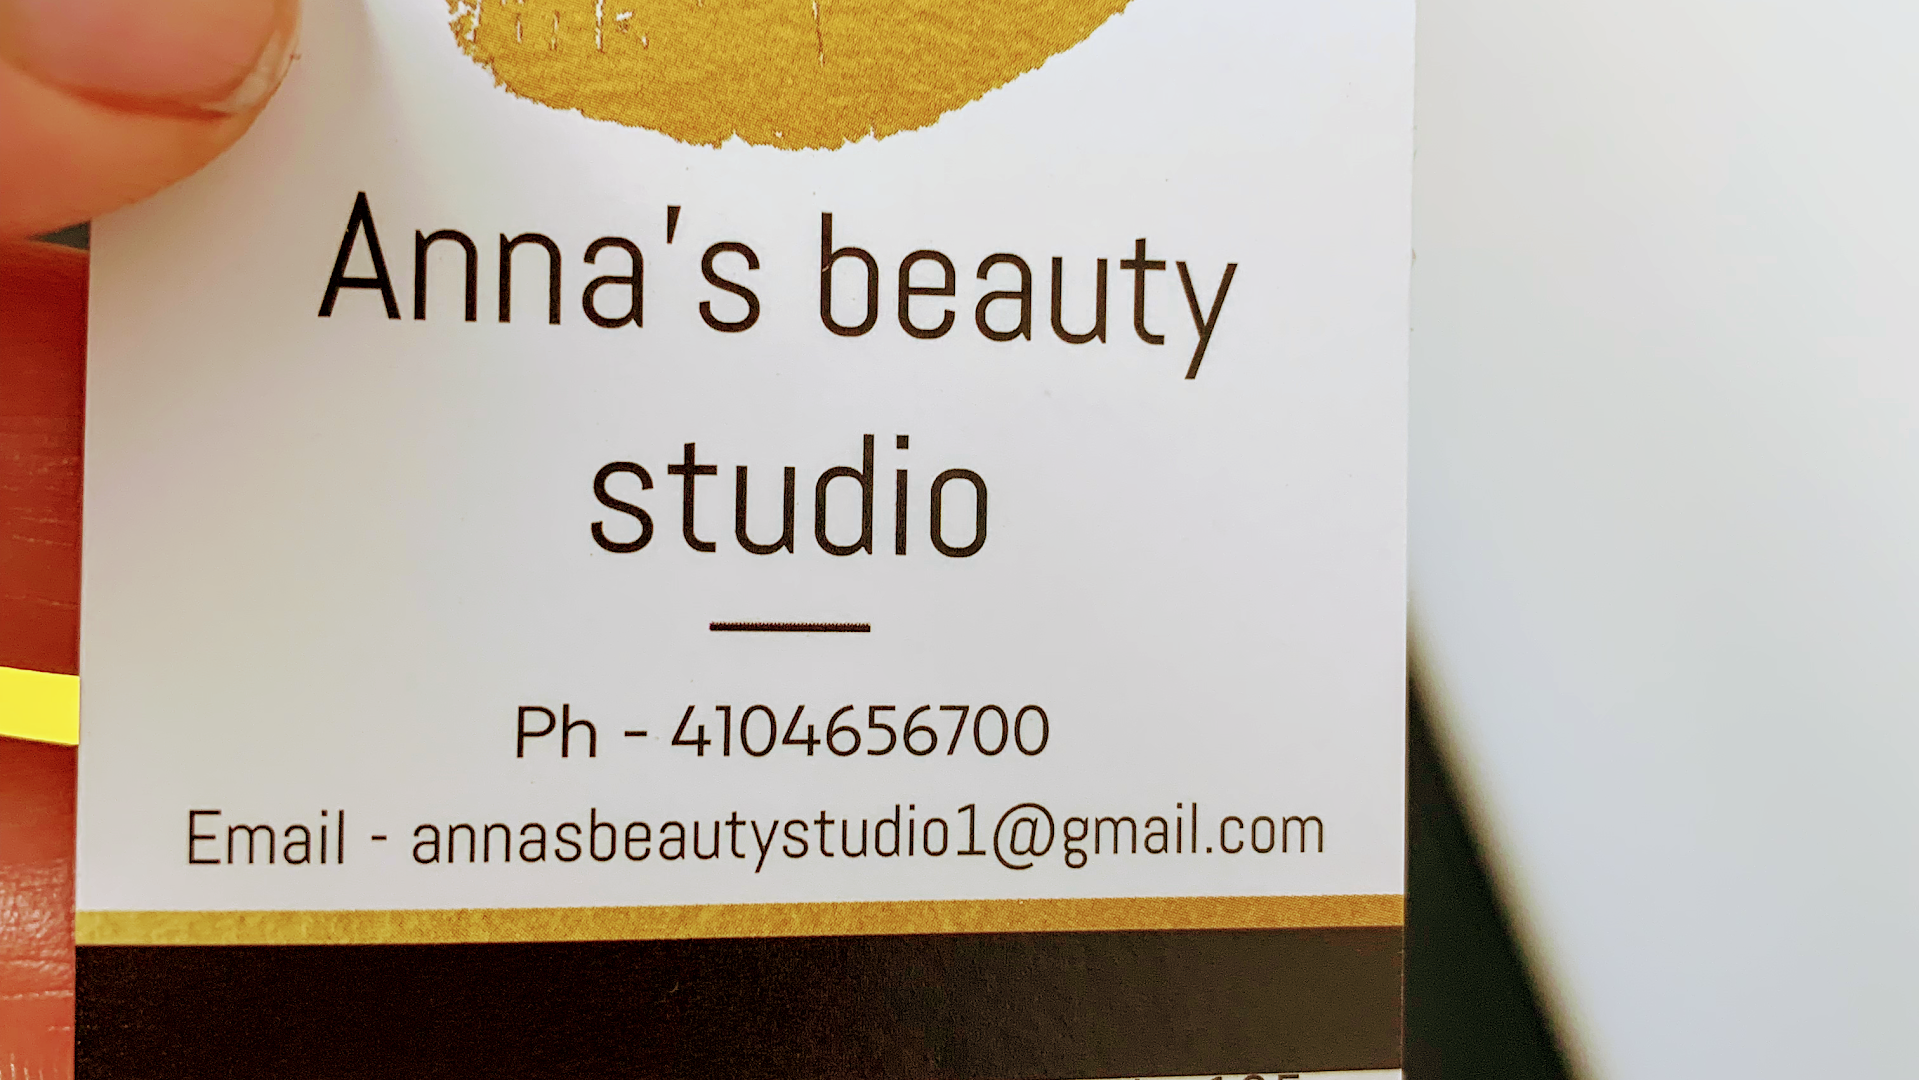 Anna's beauty studio